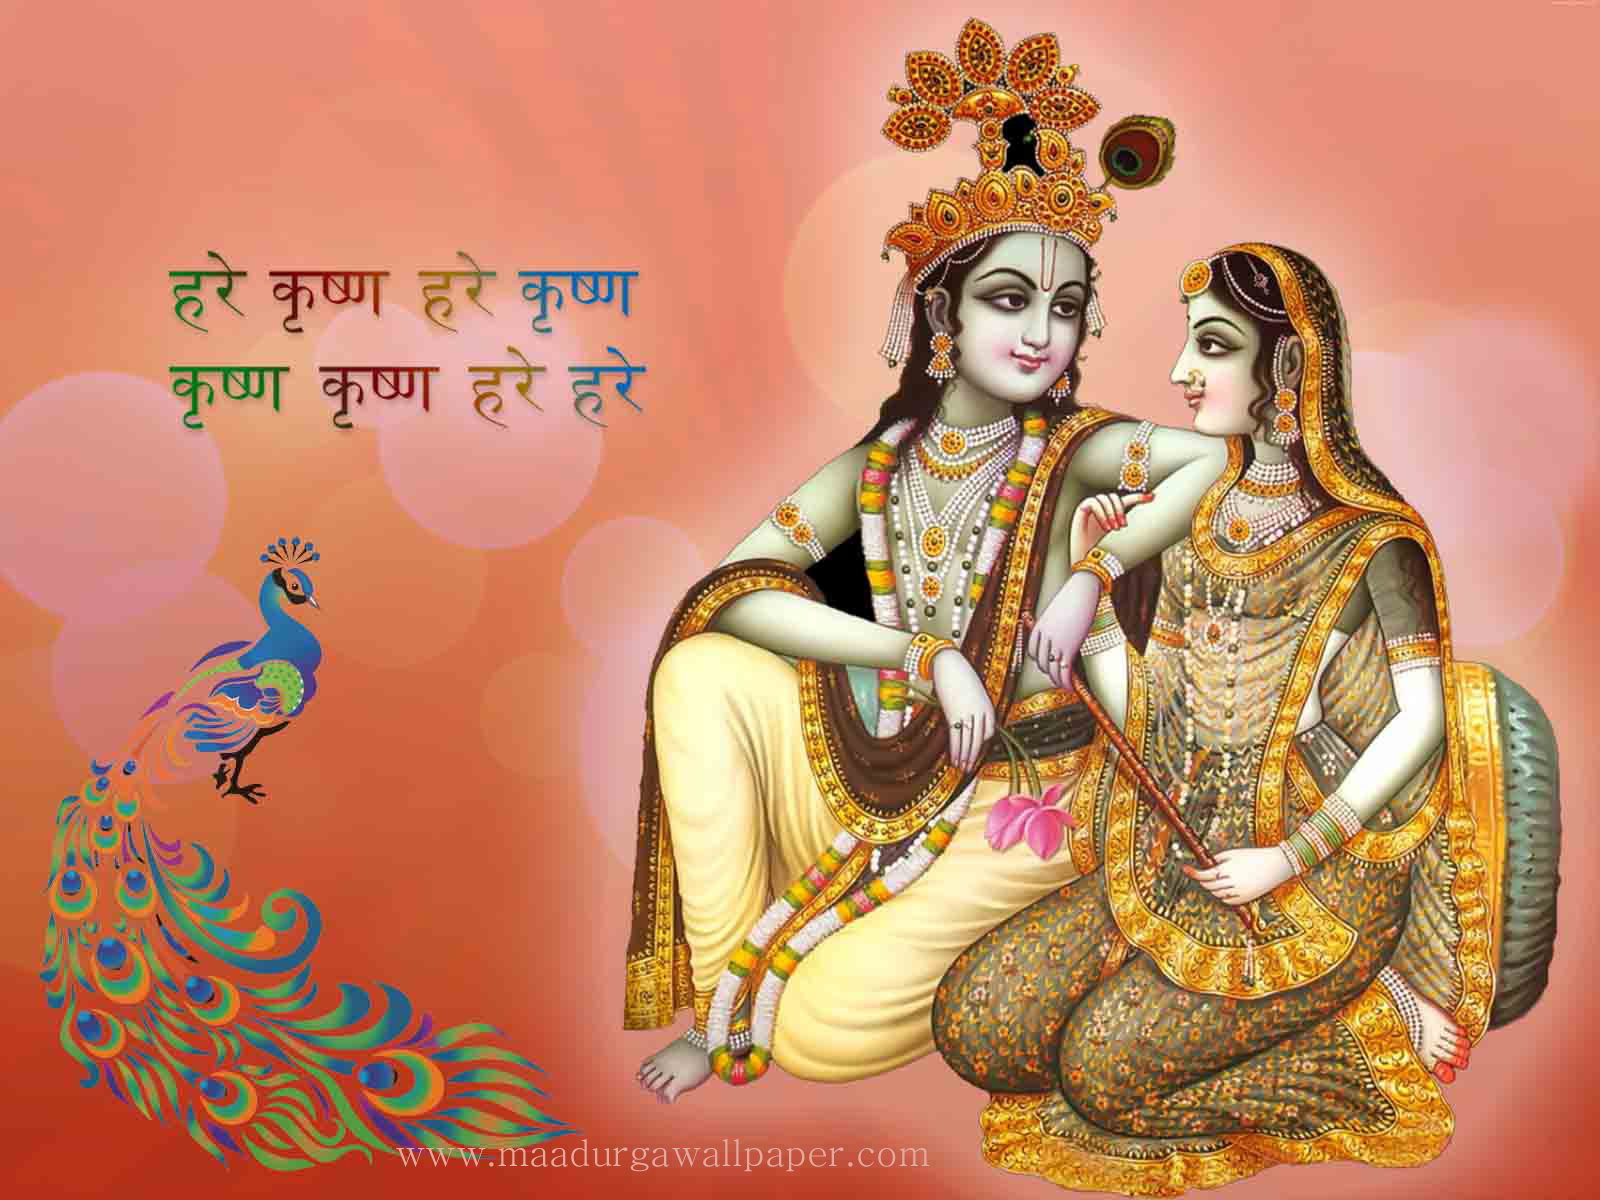 Krishna Wallpaper, HD photos, pictures & images for desktop background